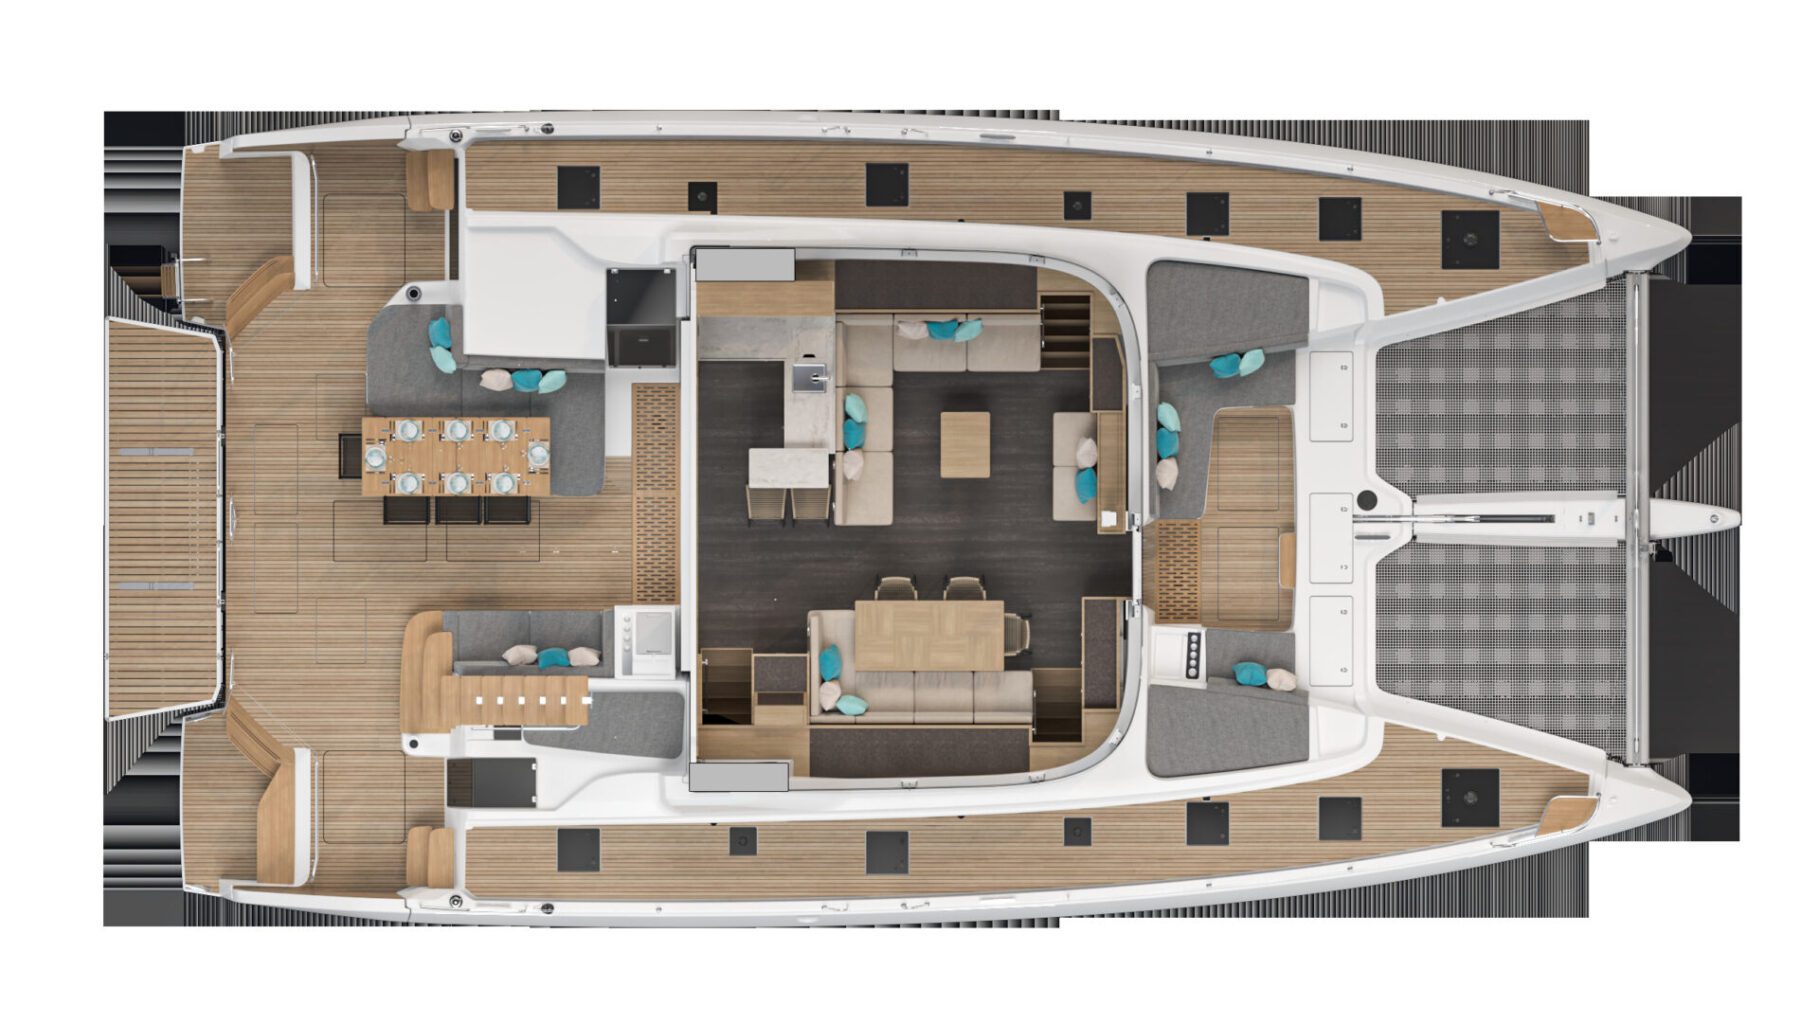 LAGOON 60 - NEW - Stream Yachts 